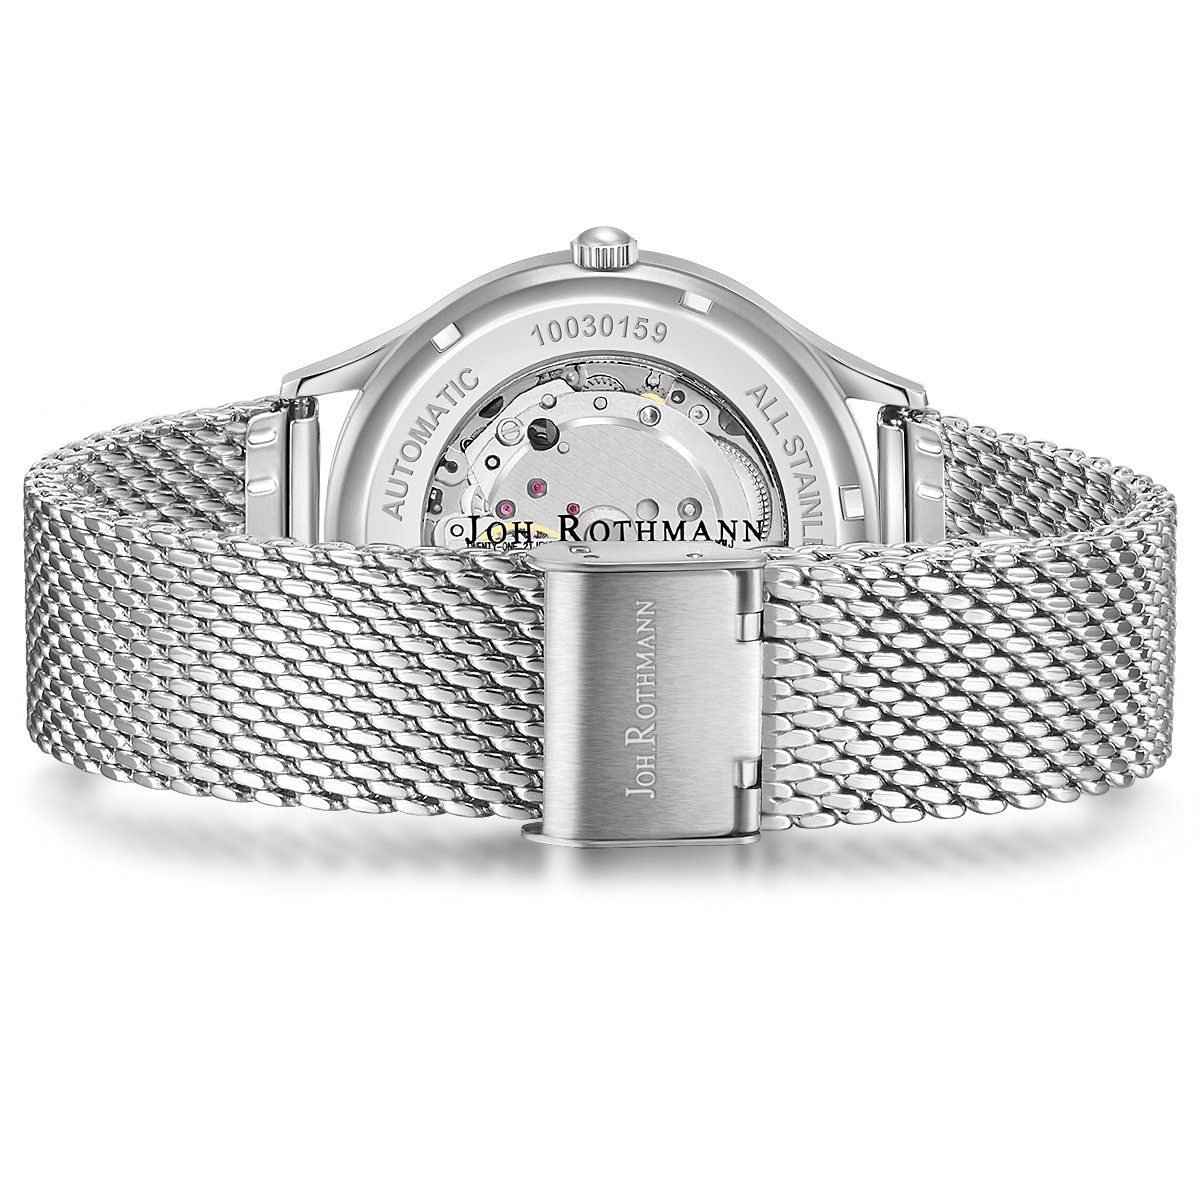 Edelstahl-Armband Automatikuhr Modern I. Rothmann silber, Joh. mit